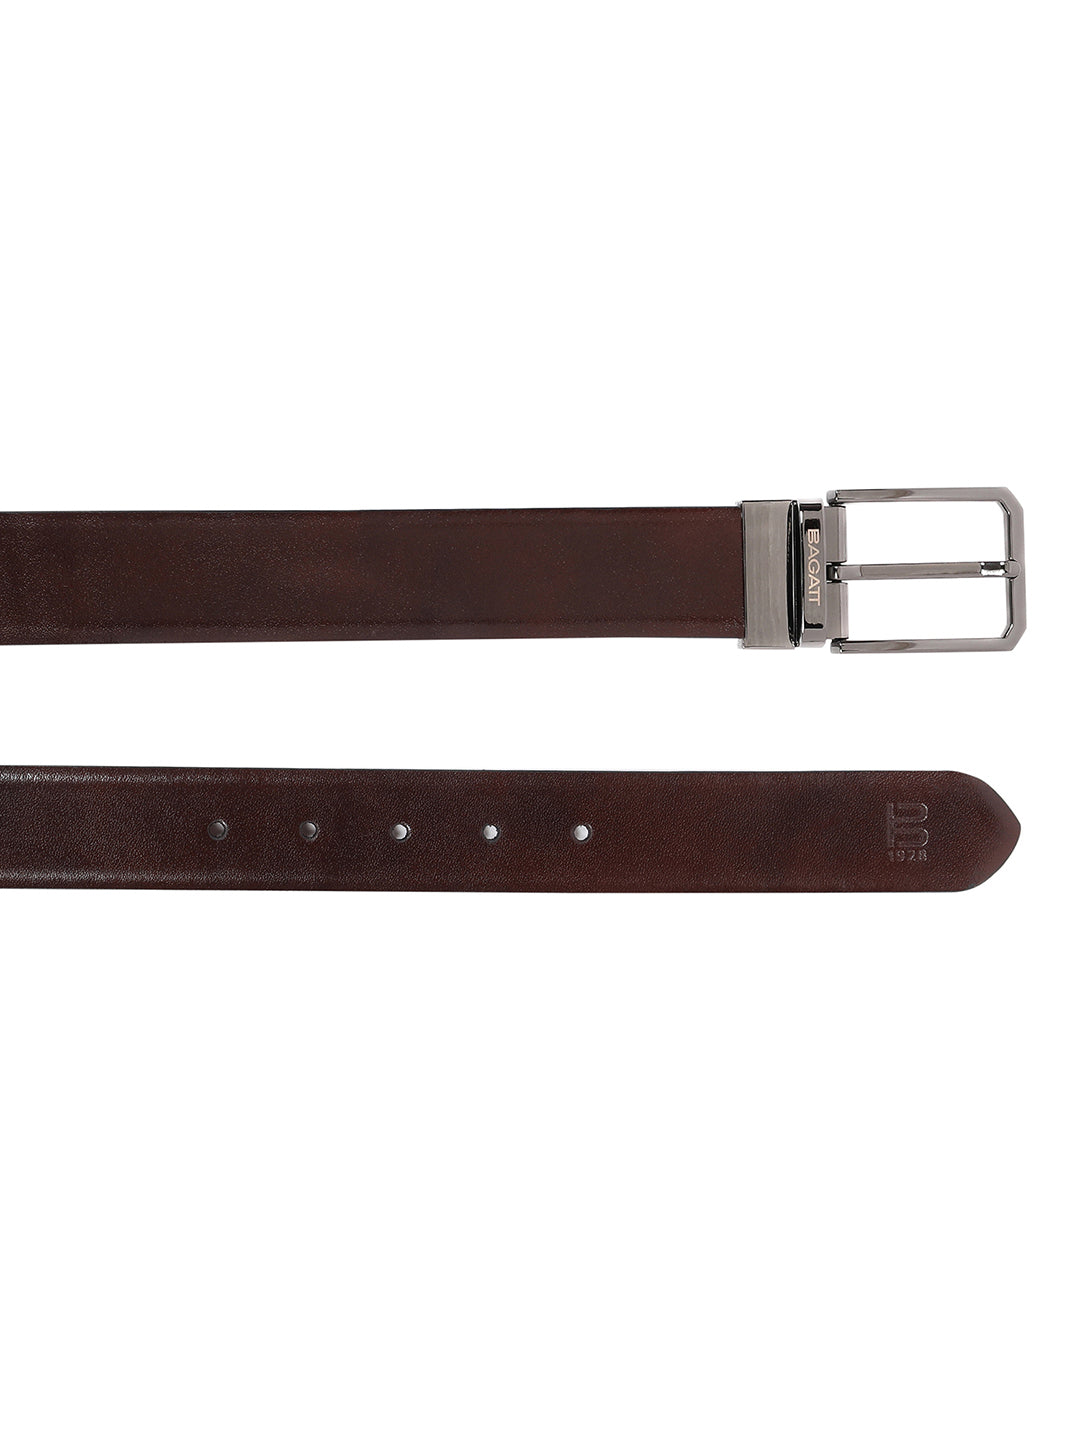 BAGATT Brown Reversible Leather Belt